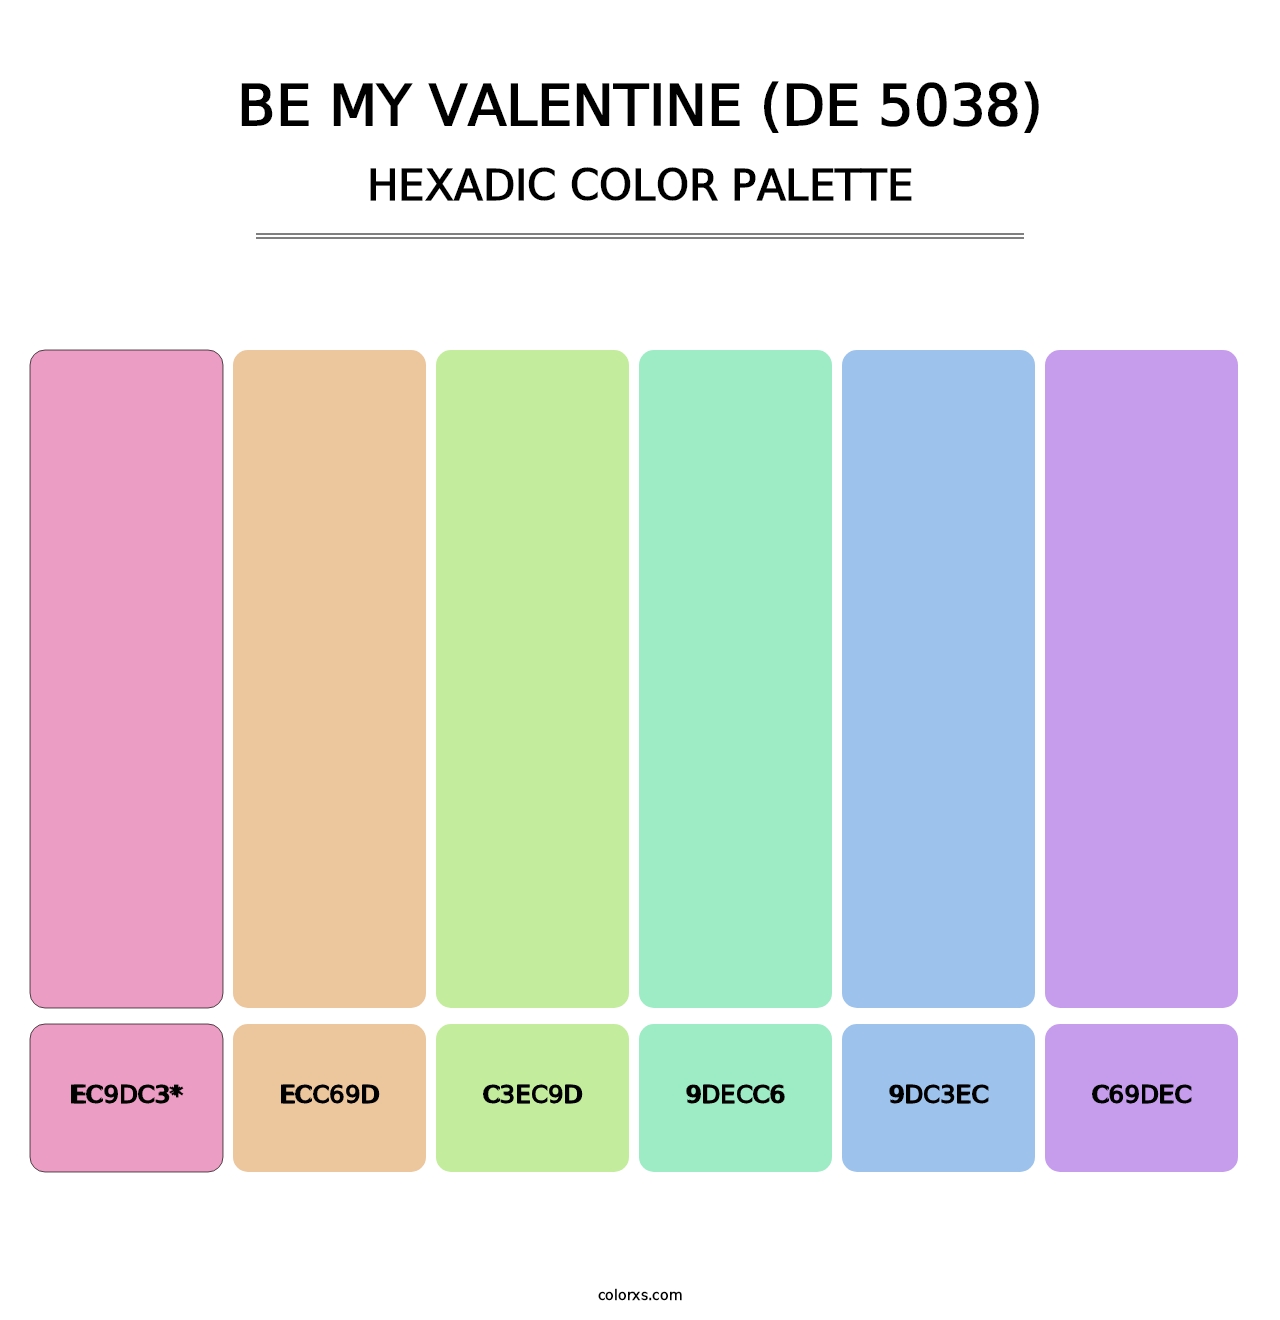 Be My Valentine (DE 5038) - Hexadic Color Palette